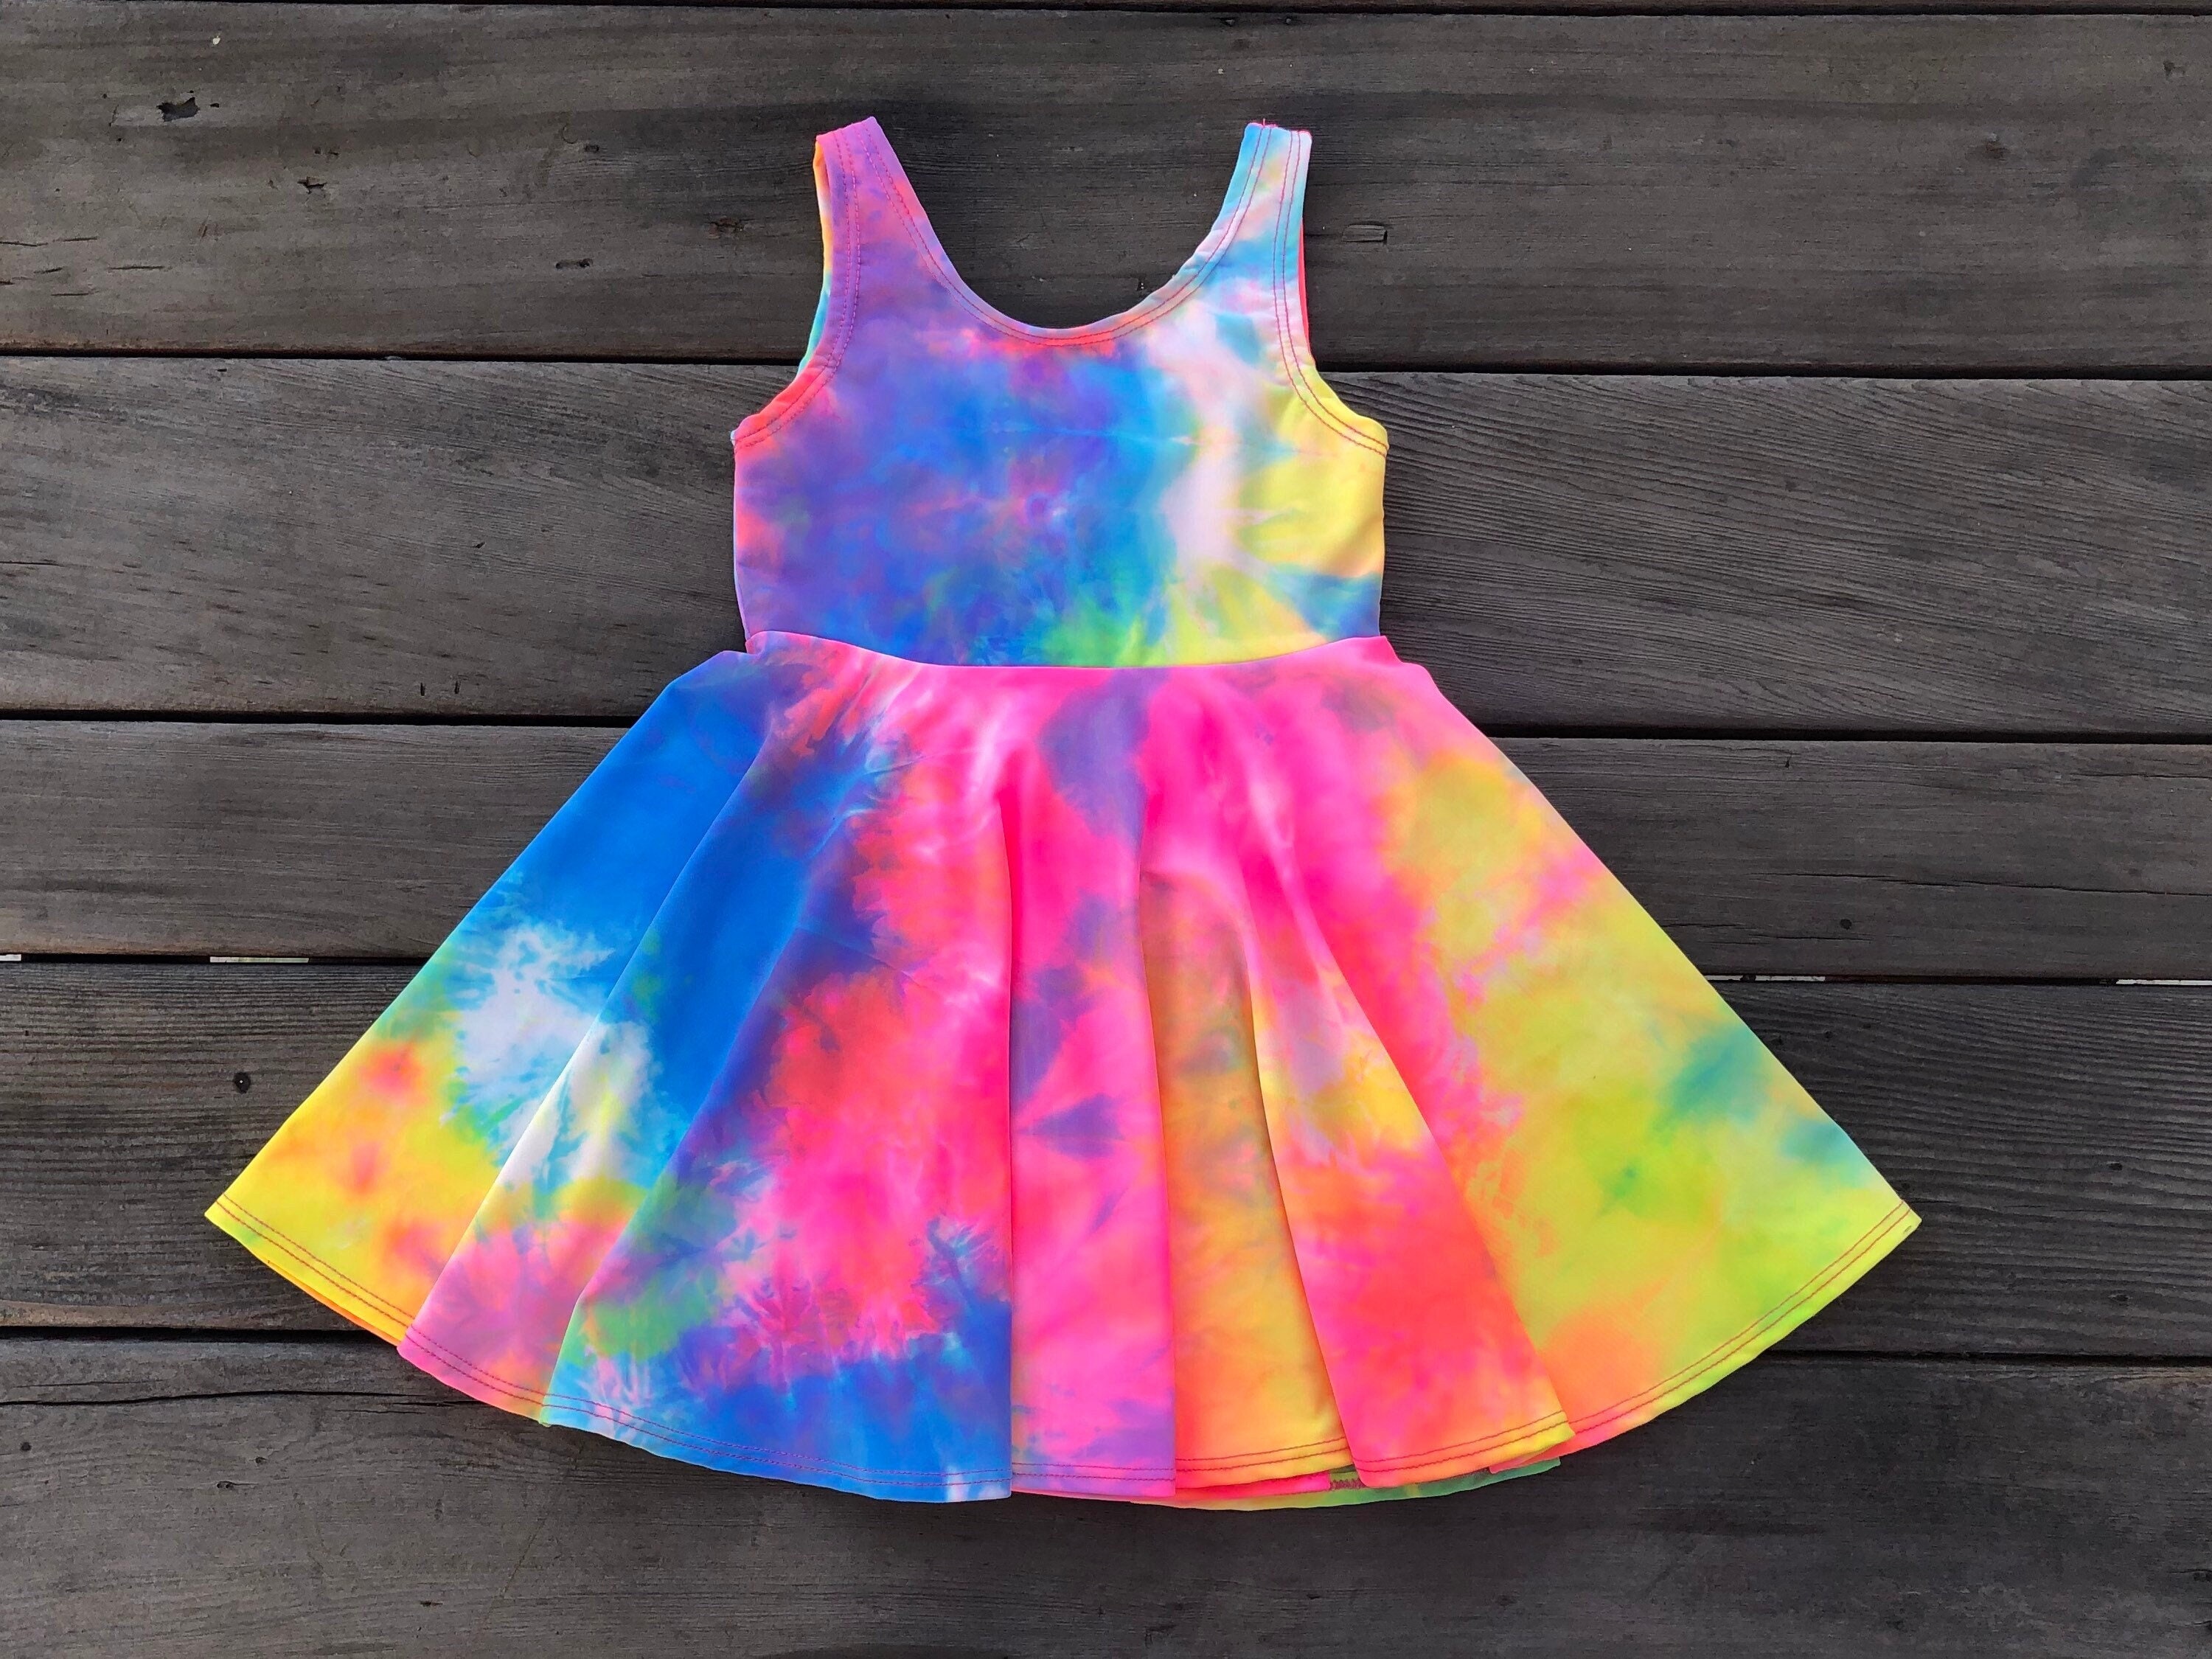 ZCFZJW Kids Little Girls Summer Dress Sleeveless Casual Tie Dye